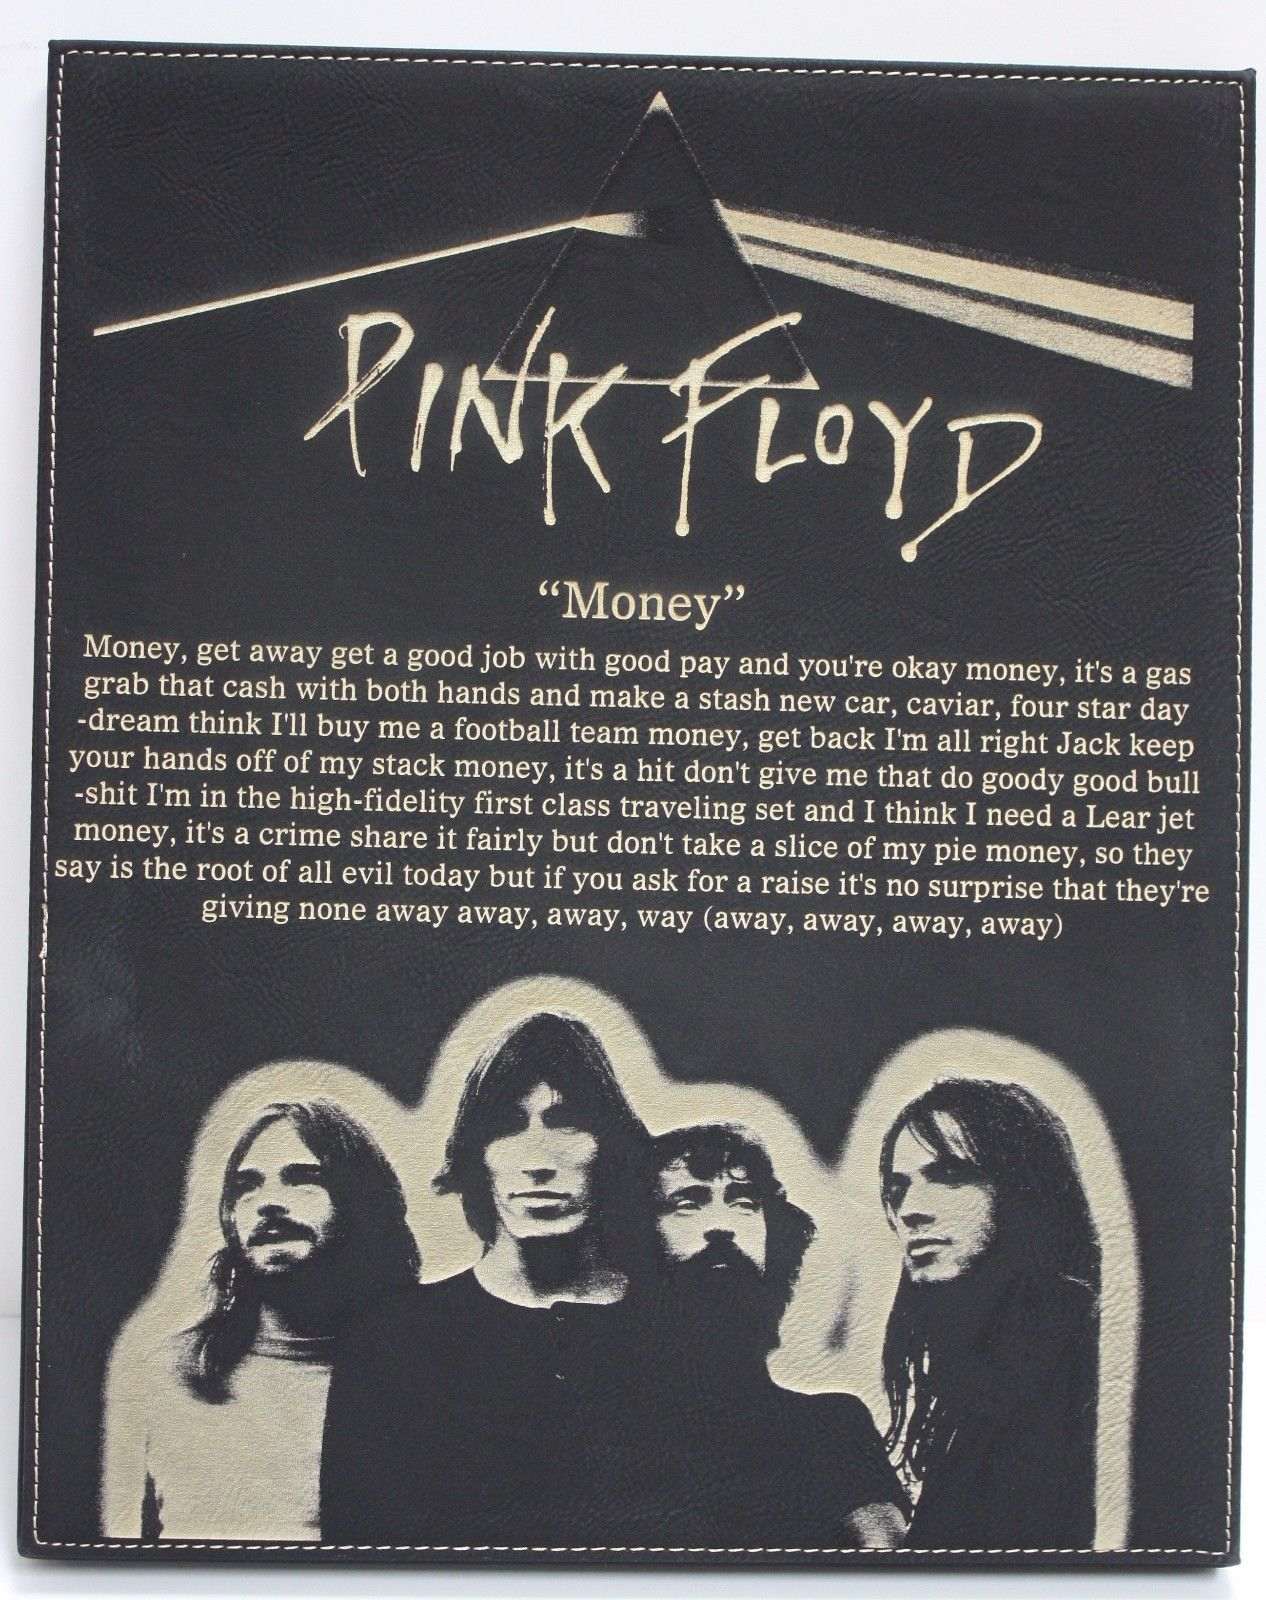 pink floyd the wall album cover art lyrics